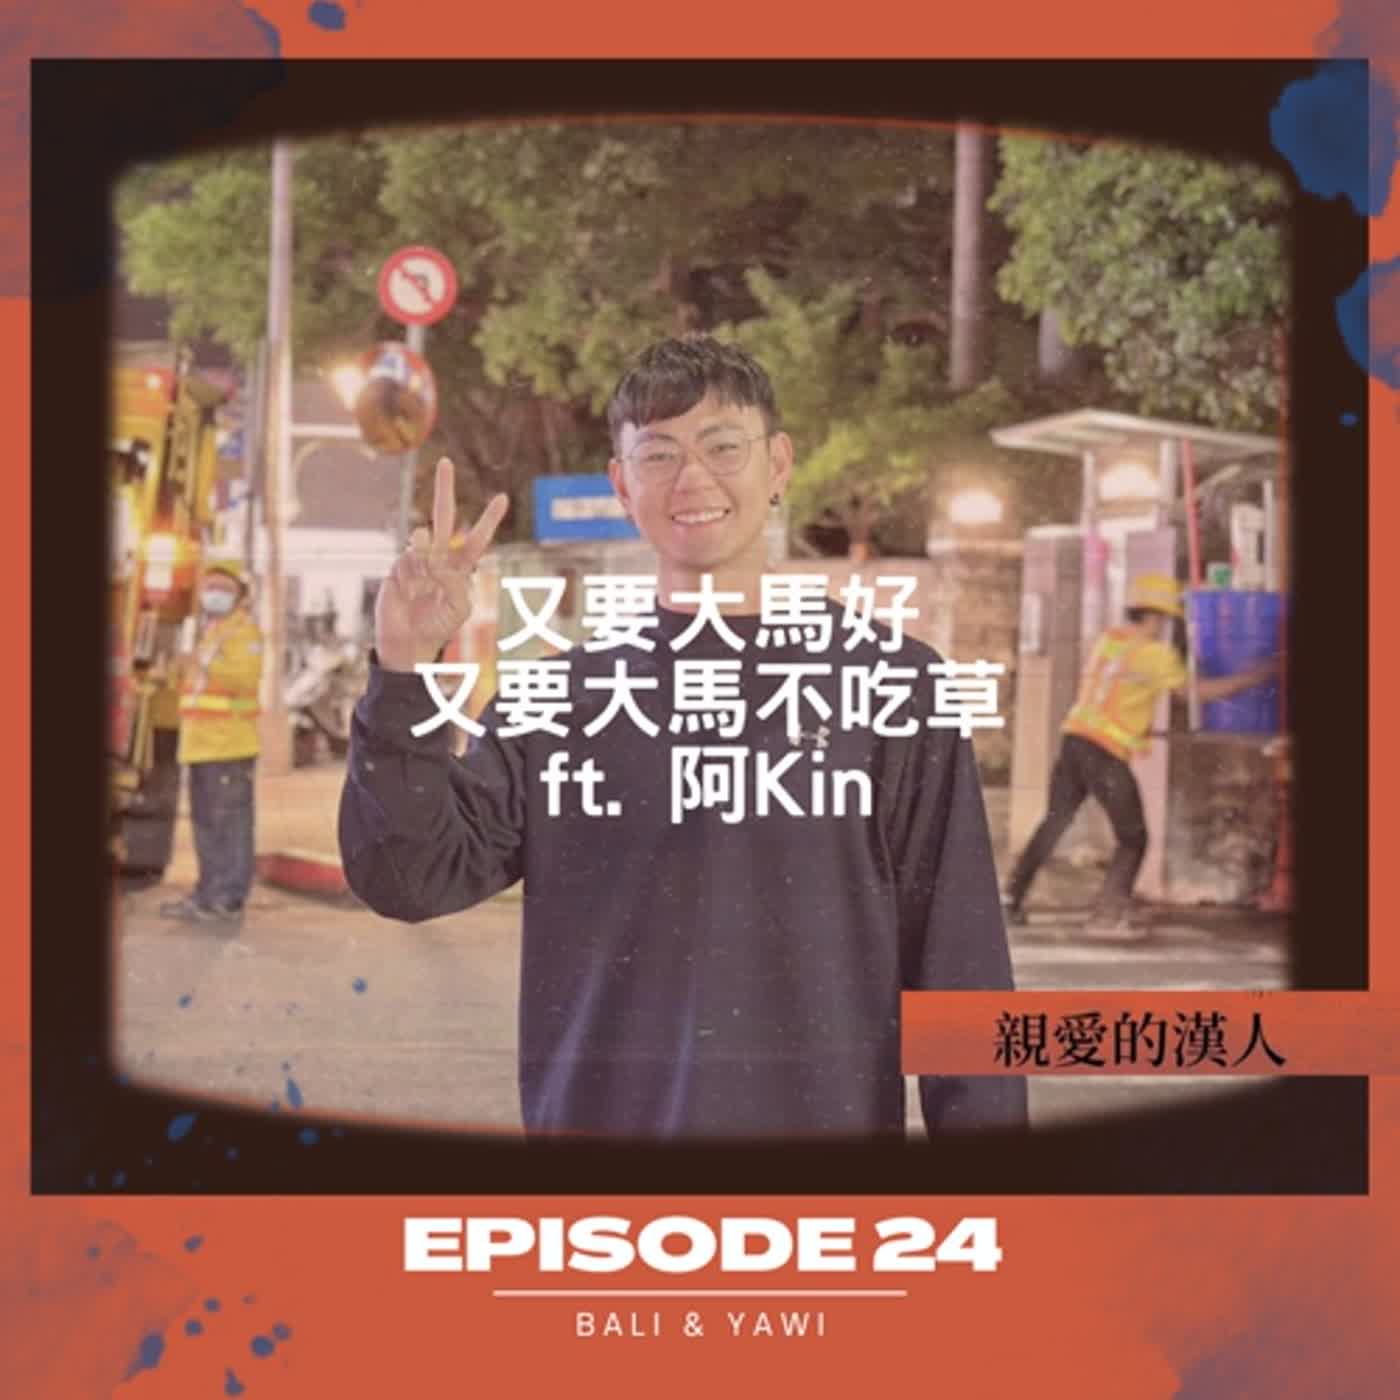 Episode 24：又要大馬好，又要大馬不吃草 ft. 阿Kin